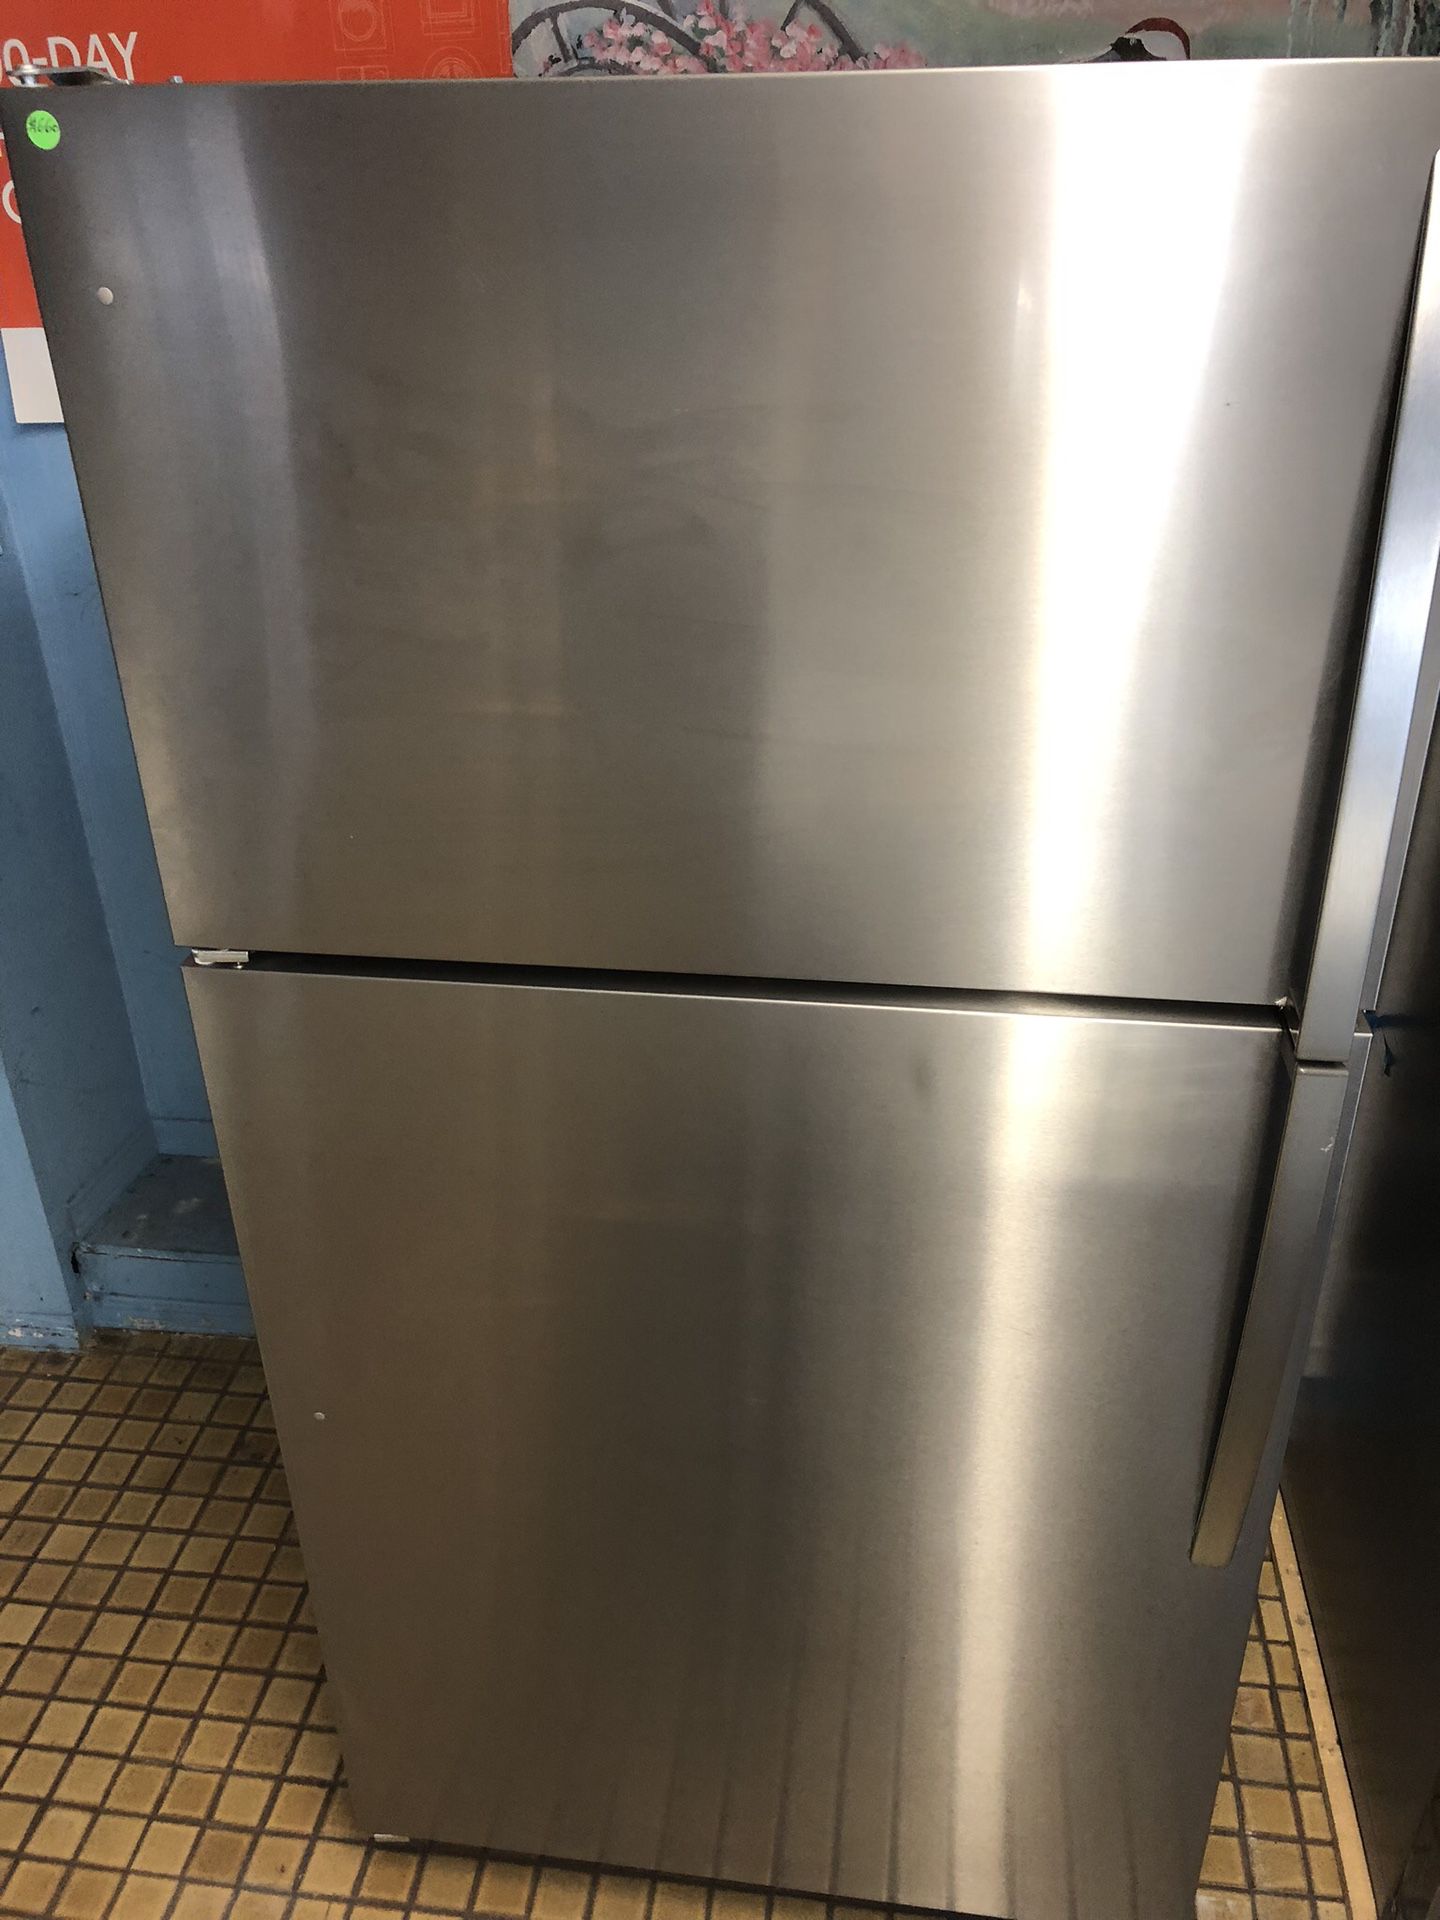 Whirlpool top freezer refrigerator stainless steel